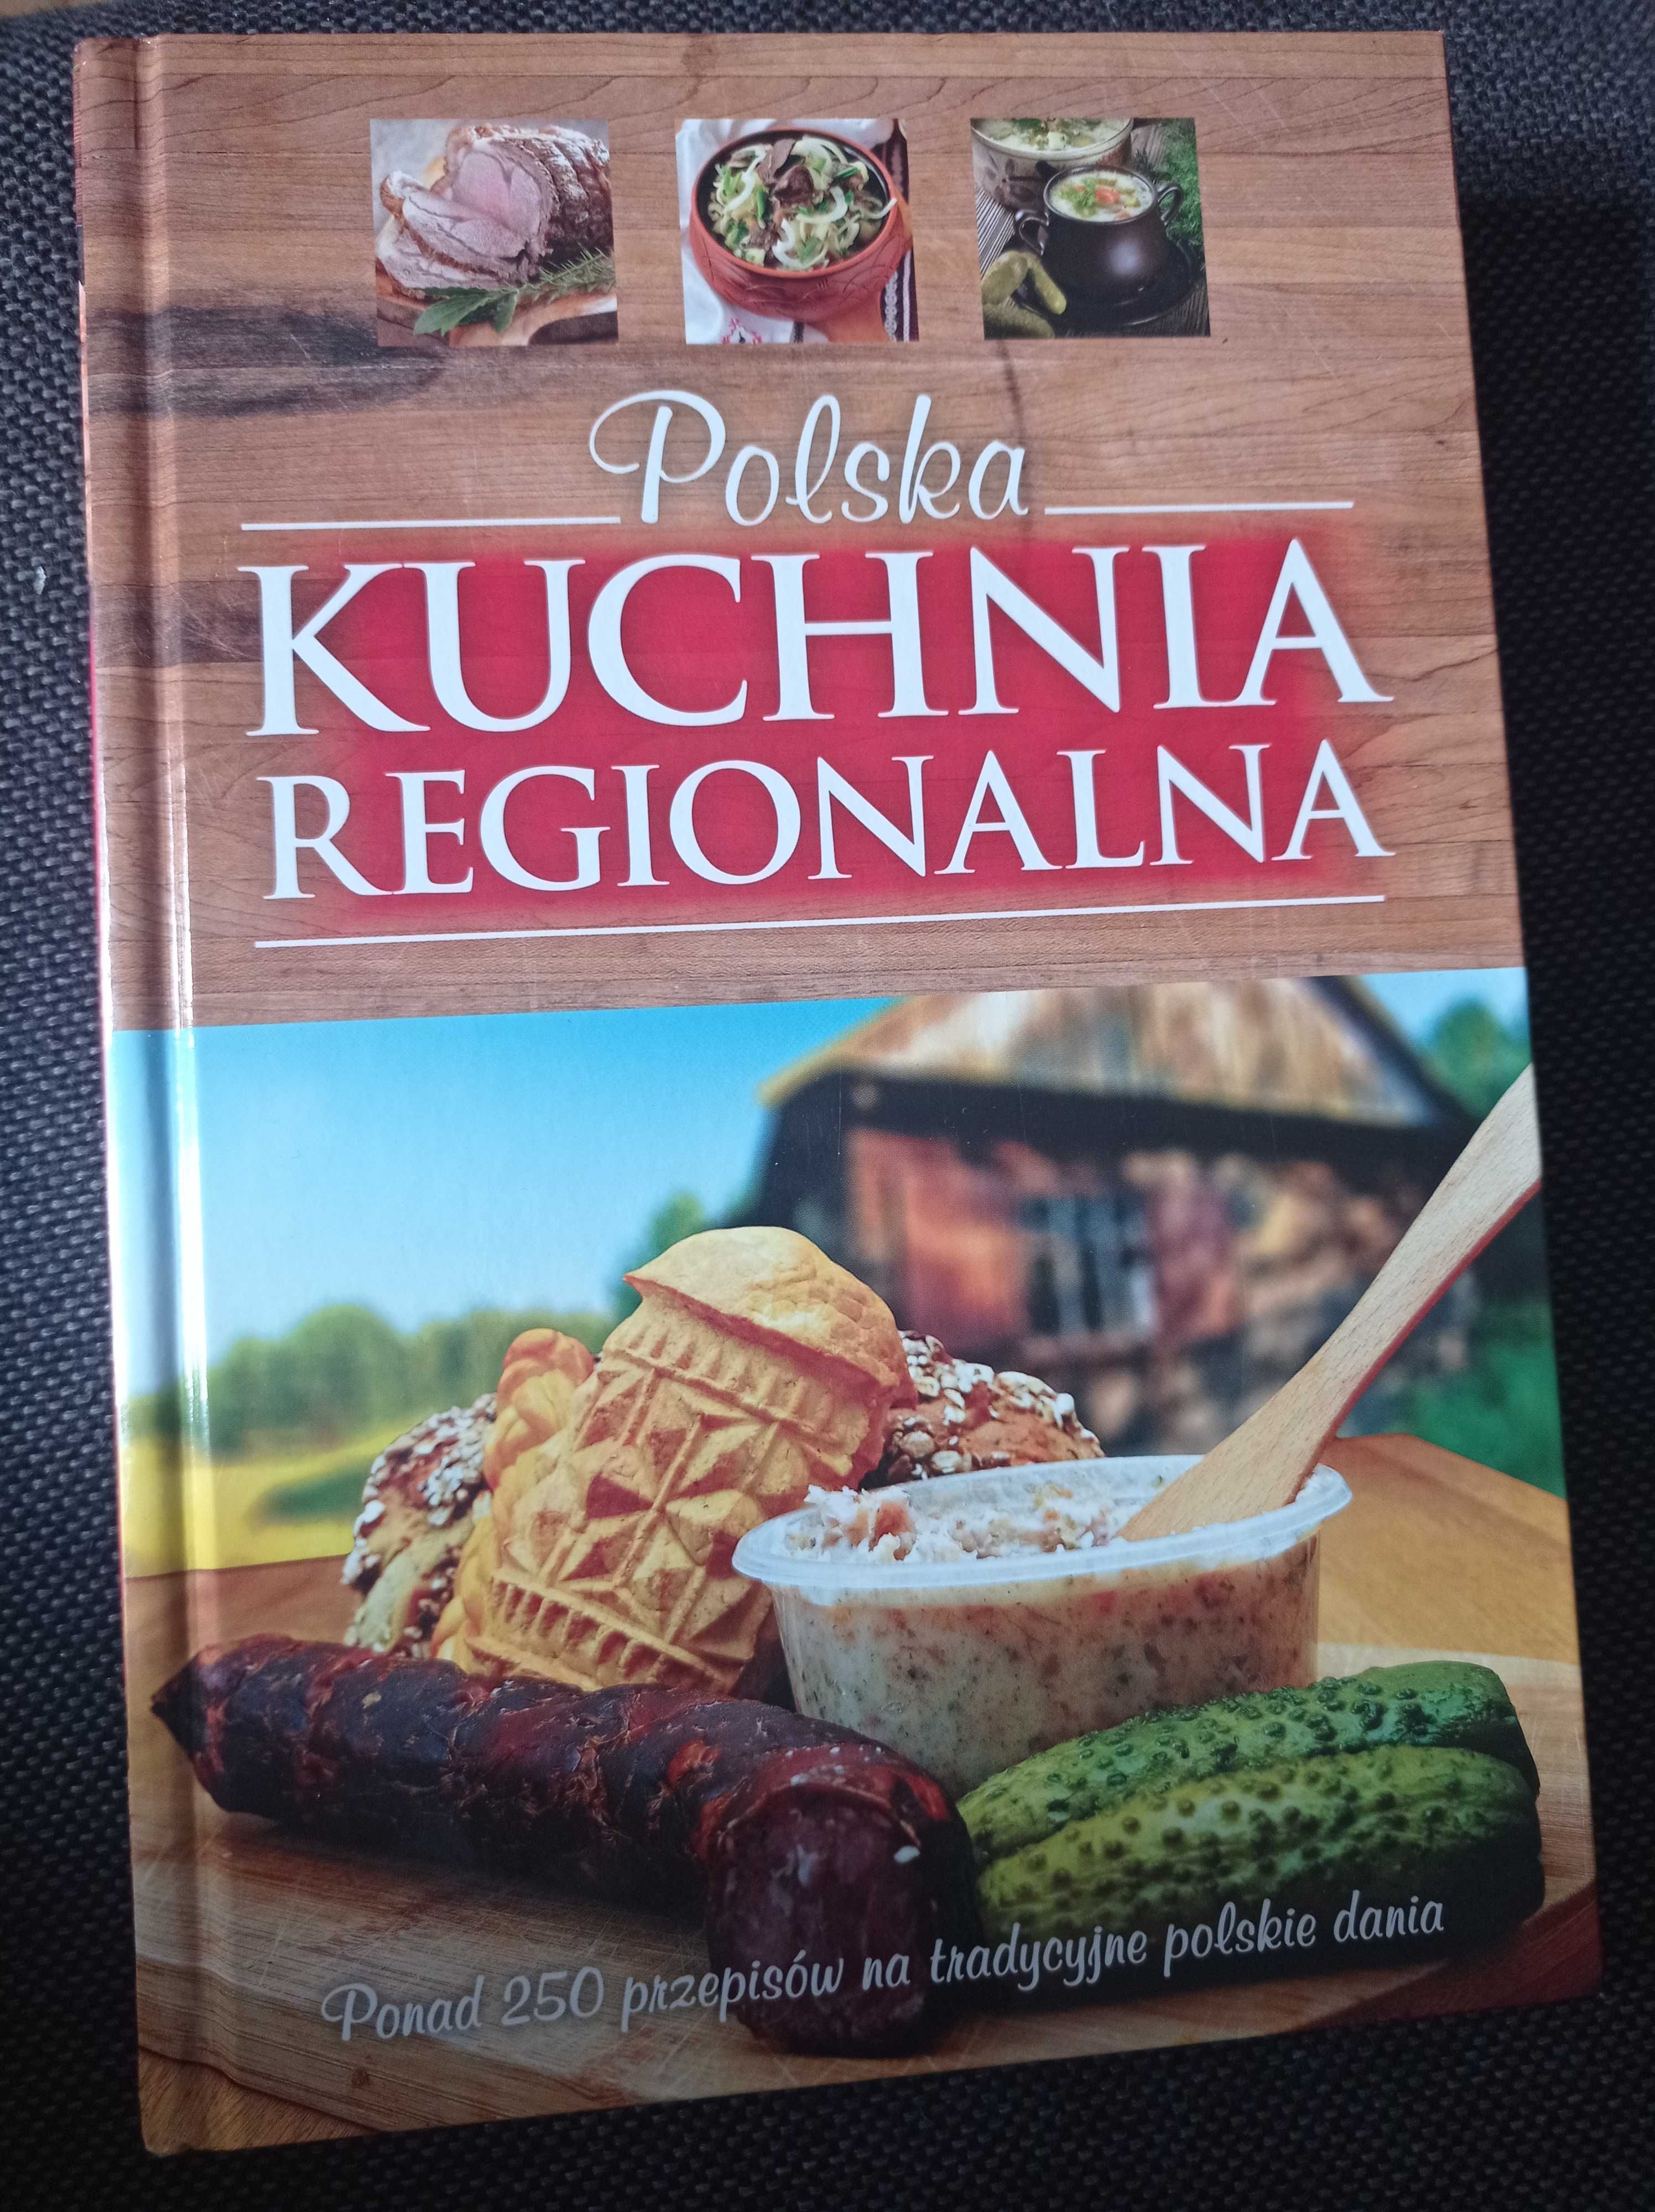 Książka pt. "Polska Kuchnia Regionalna"